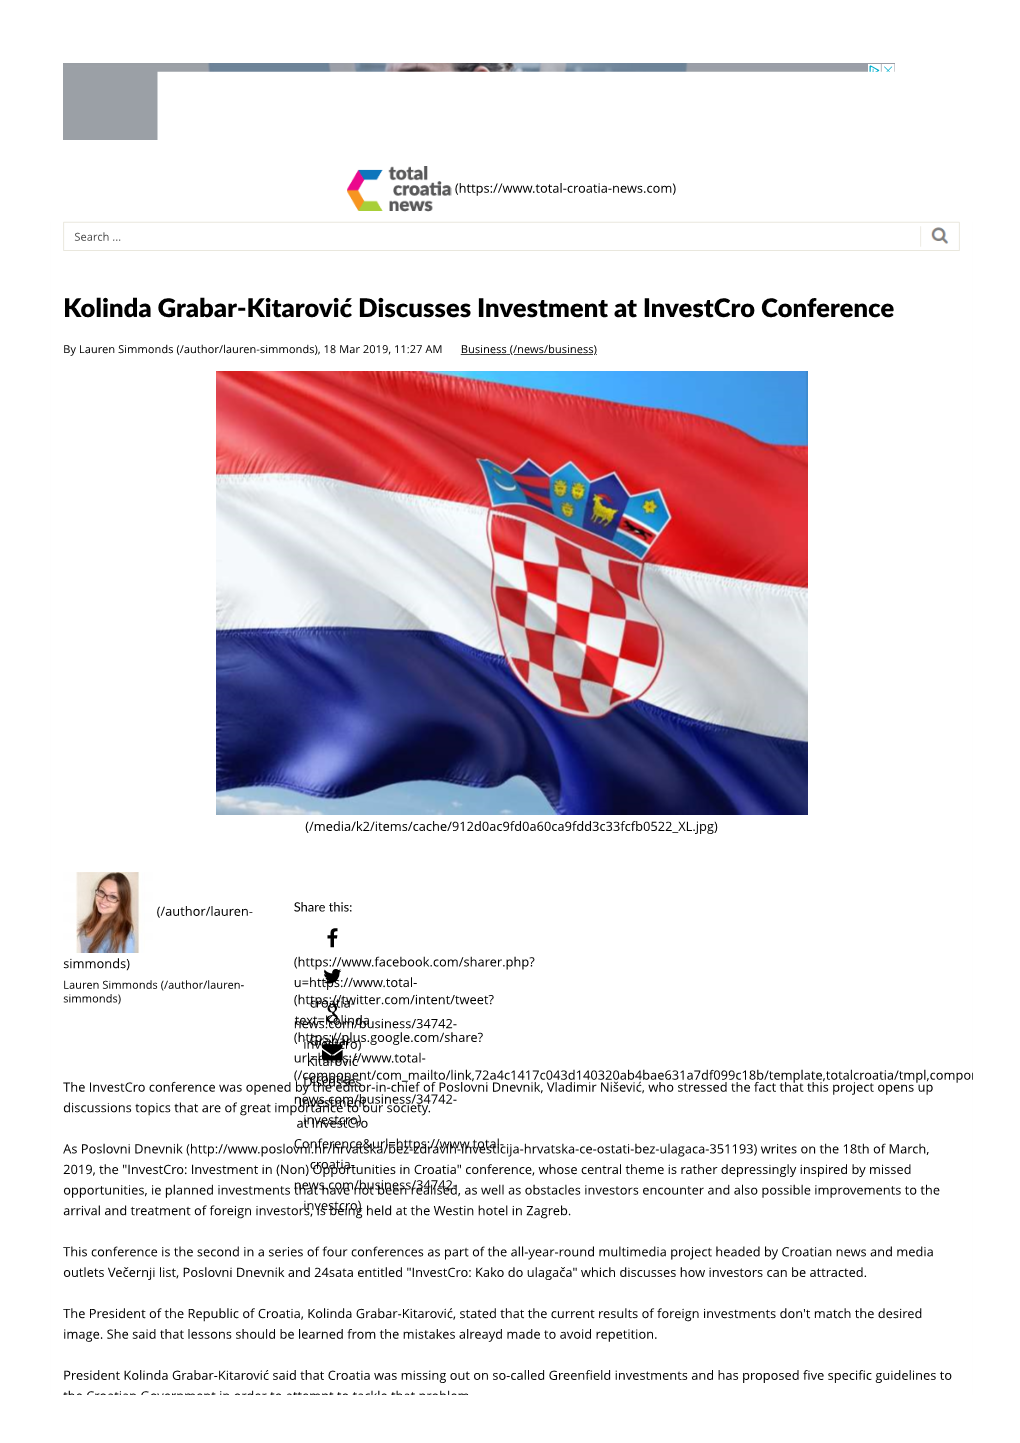 Kolinda Grabar-Kitarović Discusses Investment at Investcro Conference